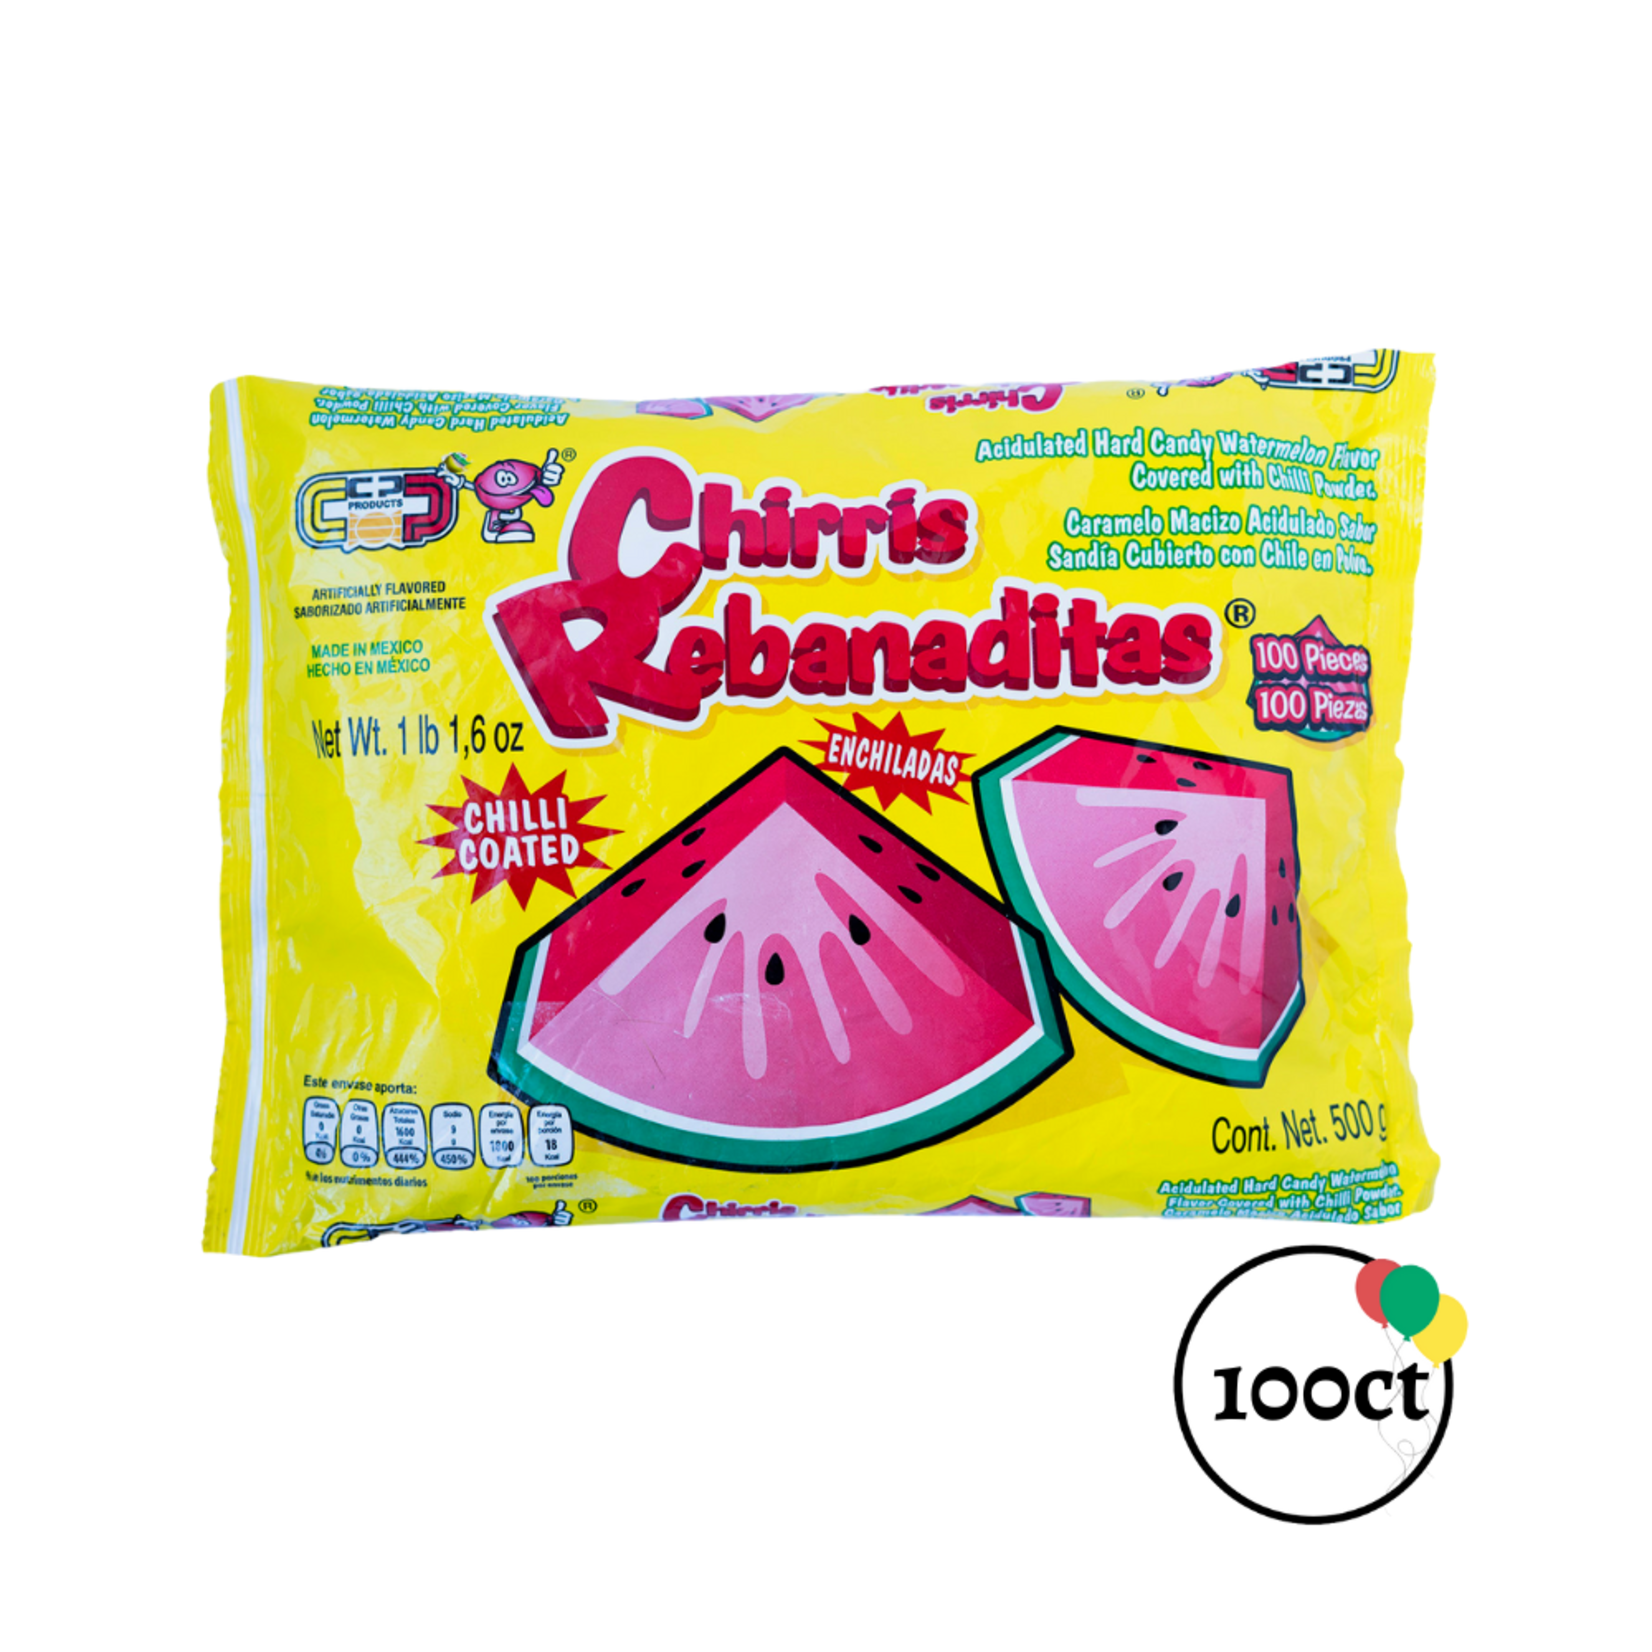 Candy Pop Products Chirris Rebanaditas 100ct